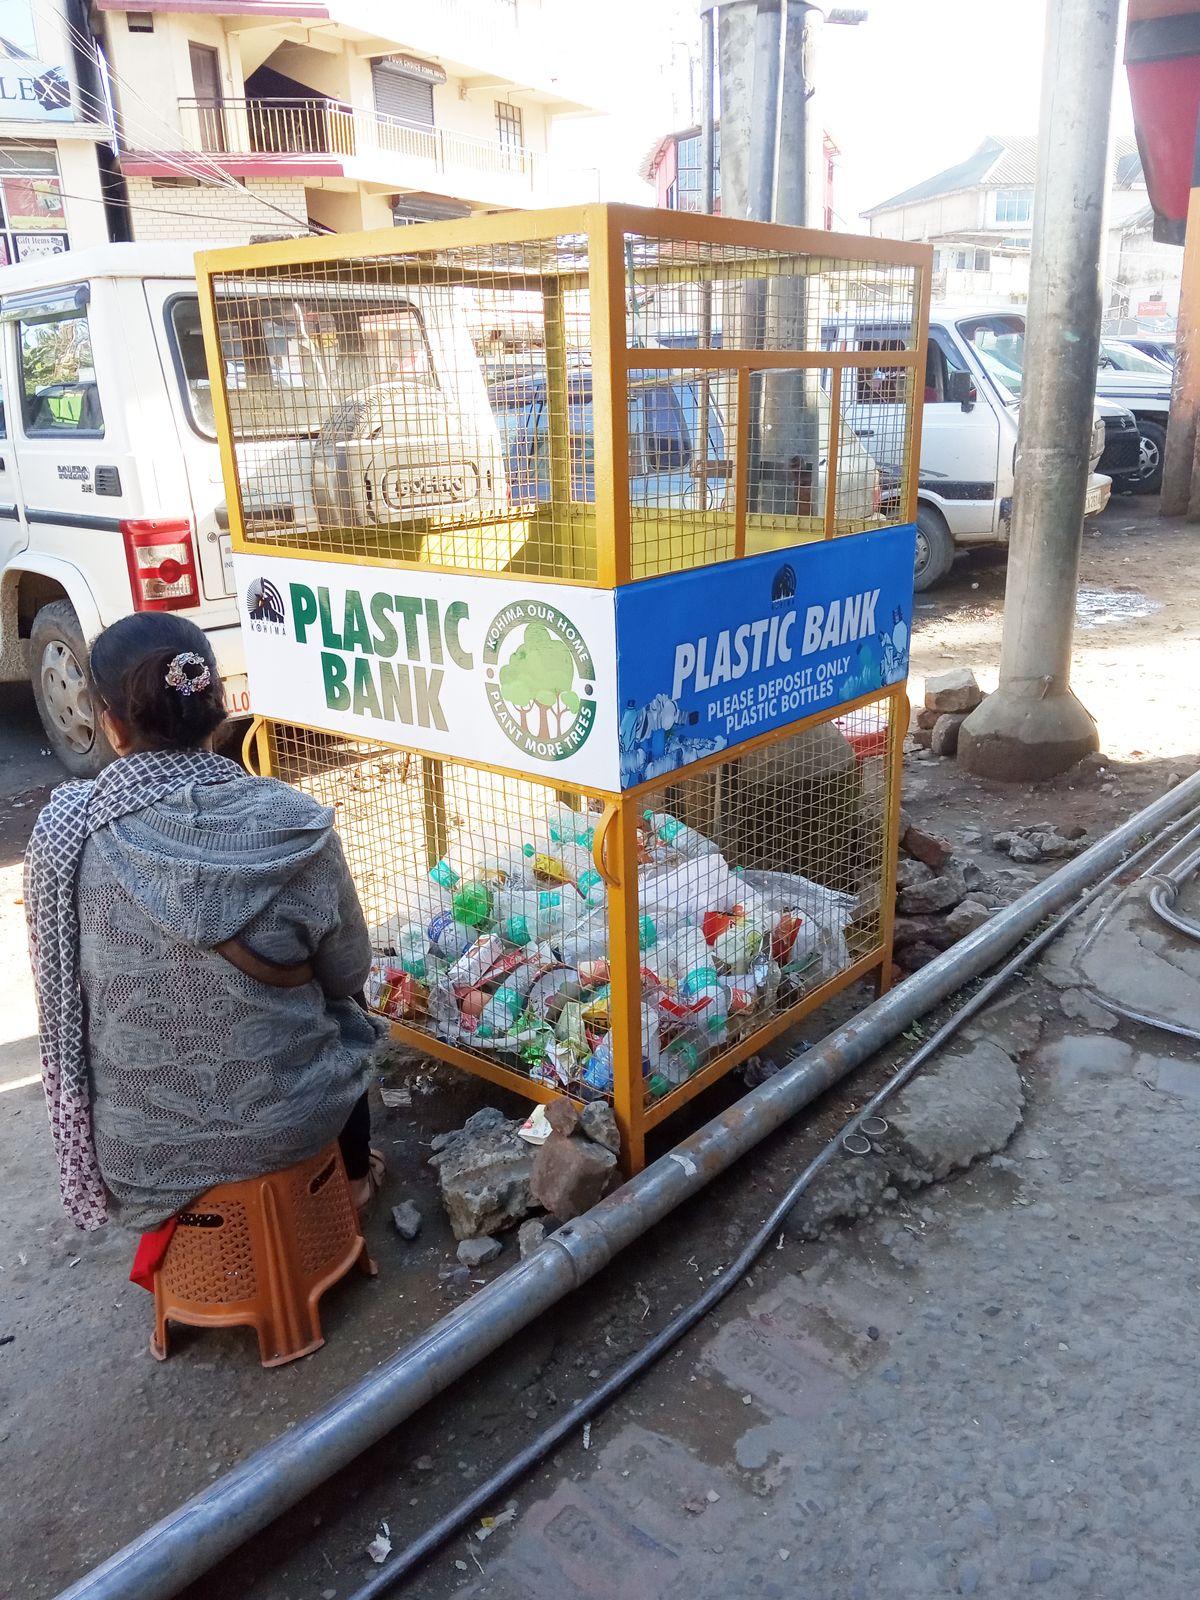 Kohima steps up Smart City goal with ‘plastic bank’